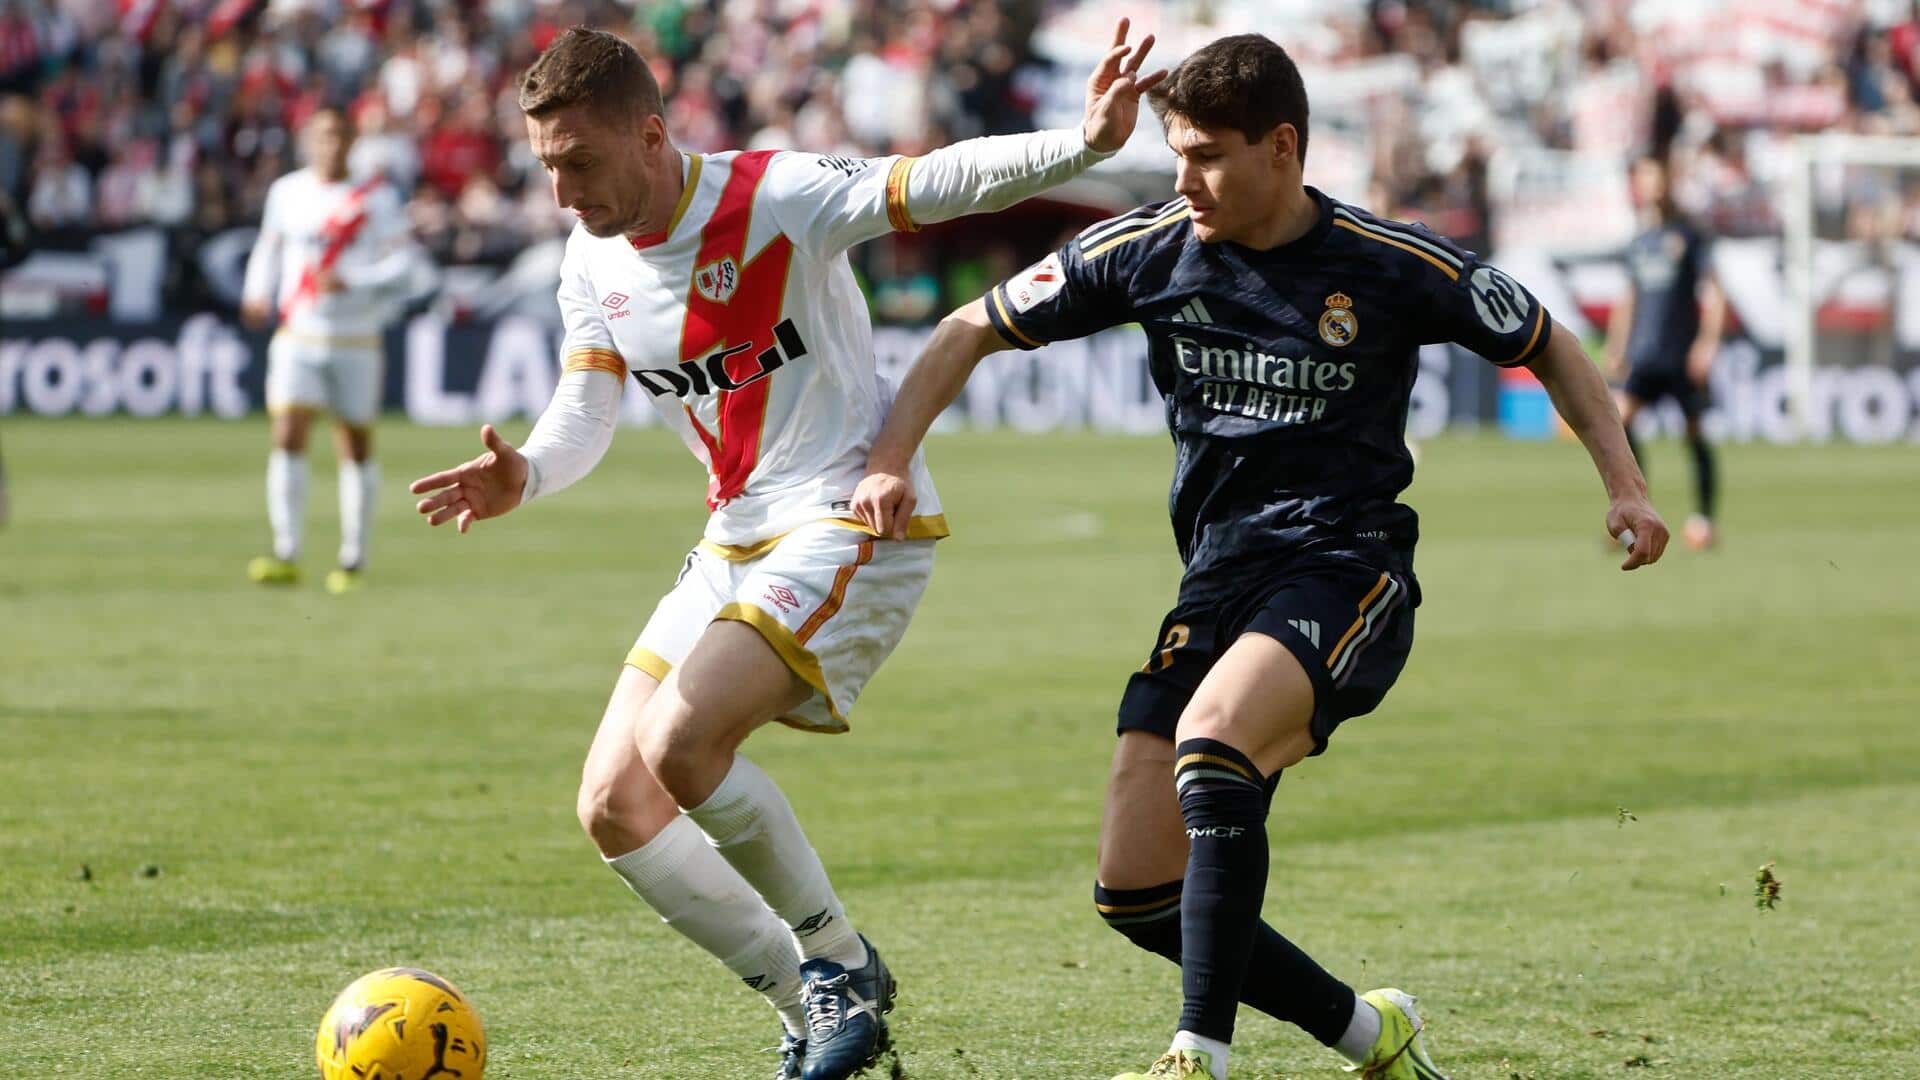 La Liga, Rayo Vallecano hold Real Madrid 1-1: Key stats